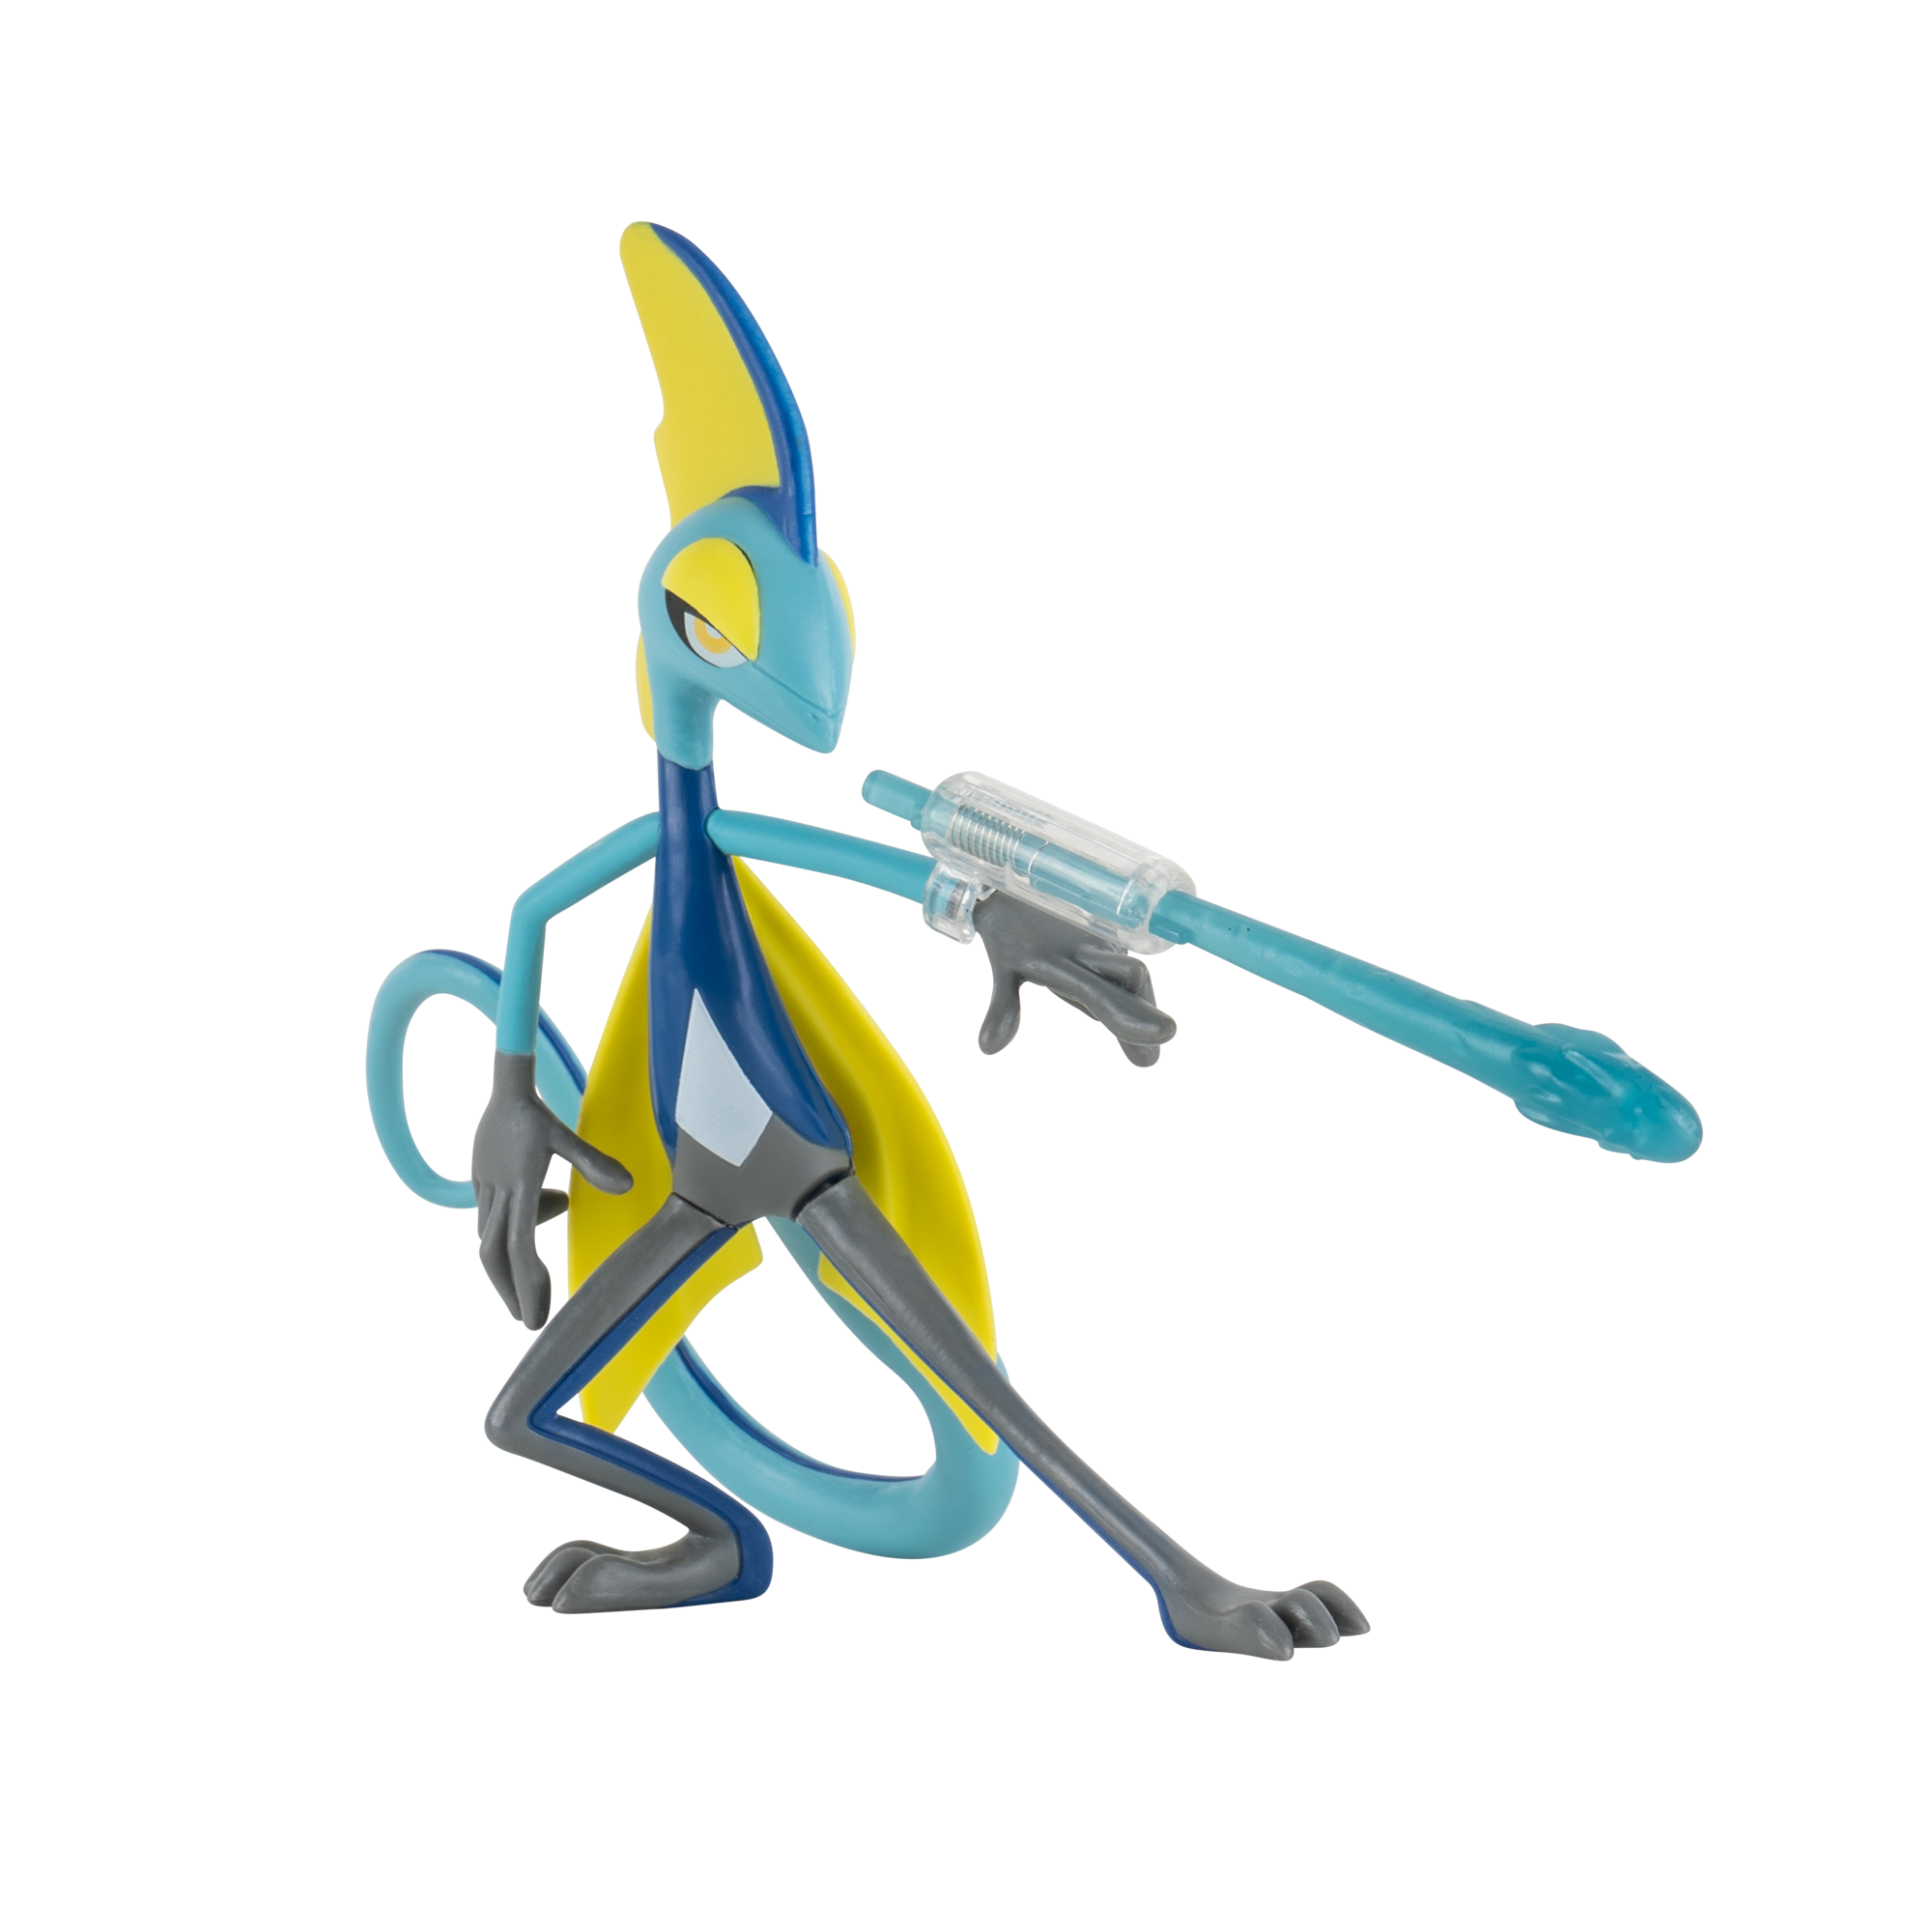 Pokemon - Battle Feature Figure - Inteleon (PKW0165)